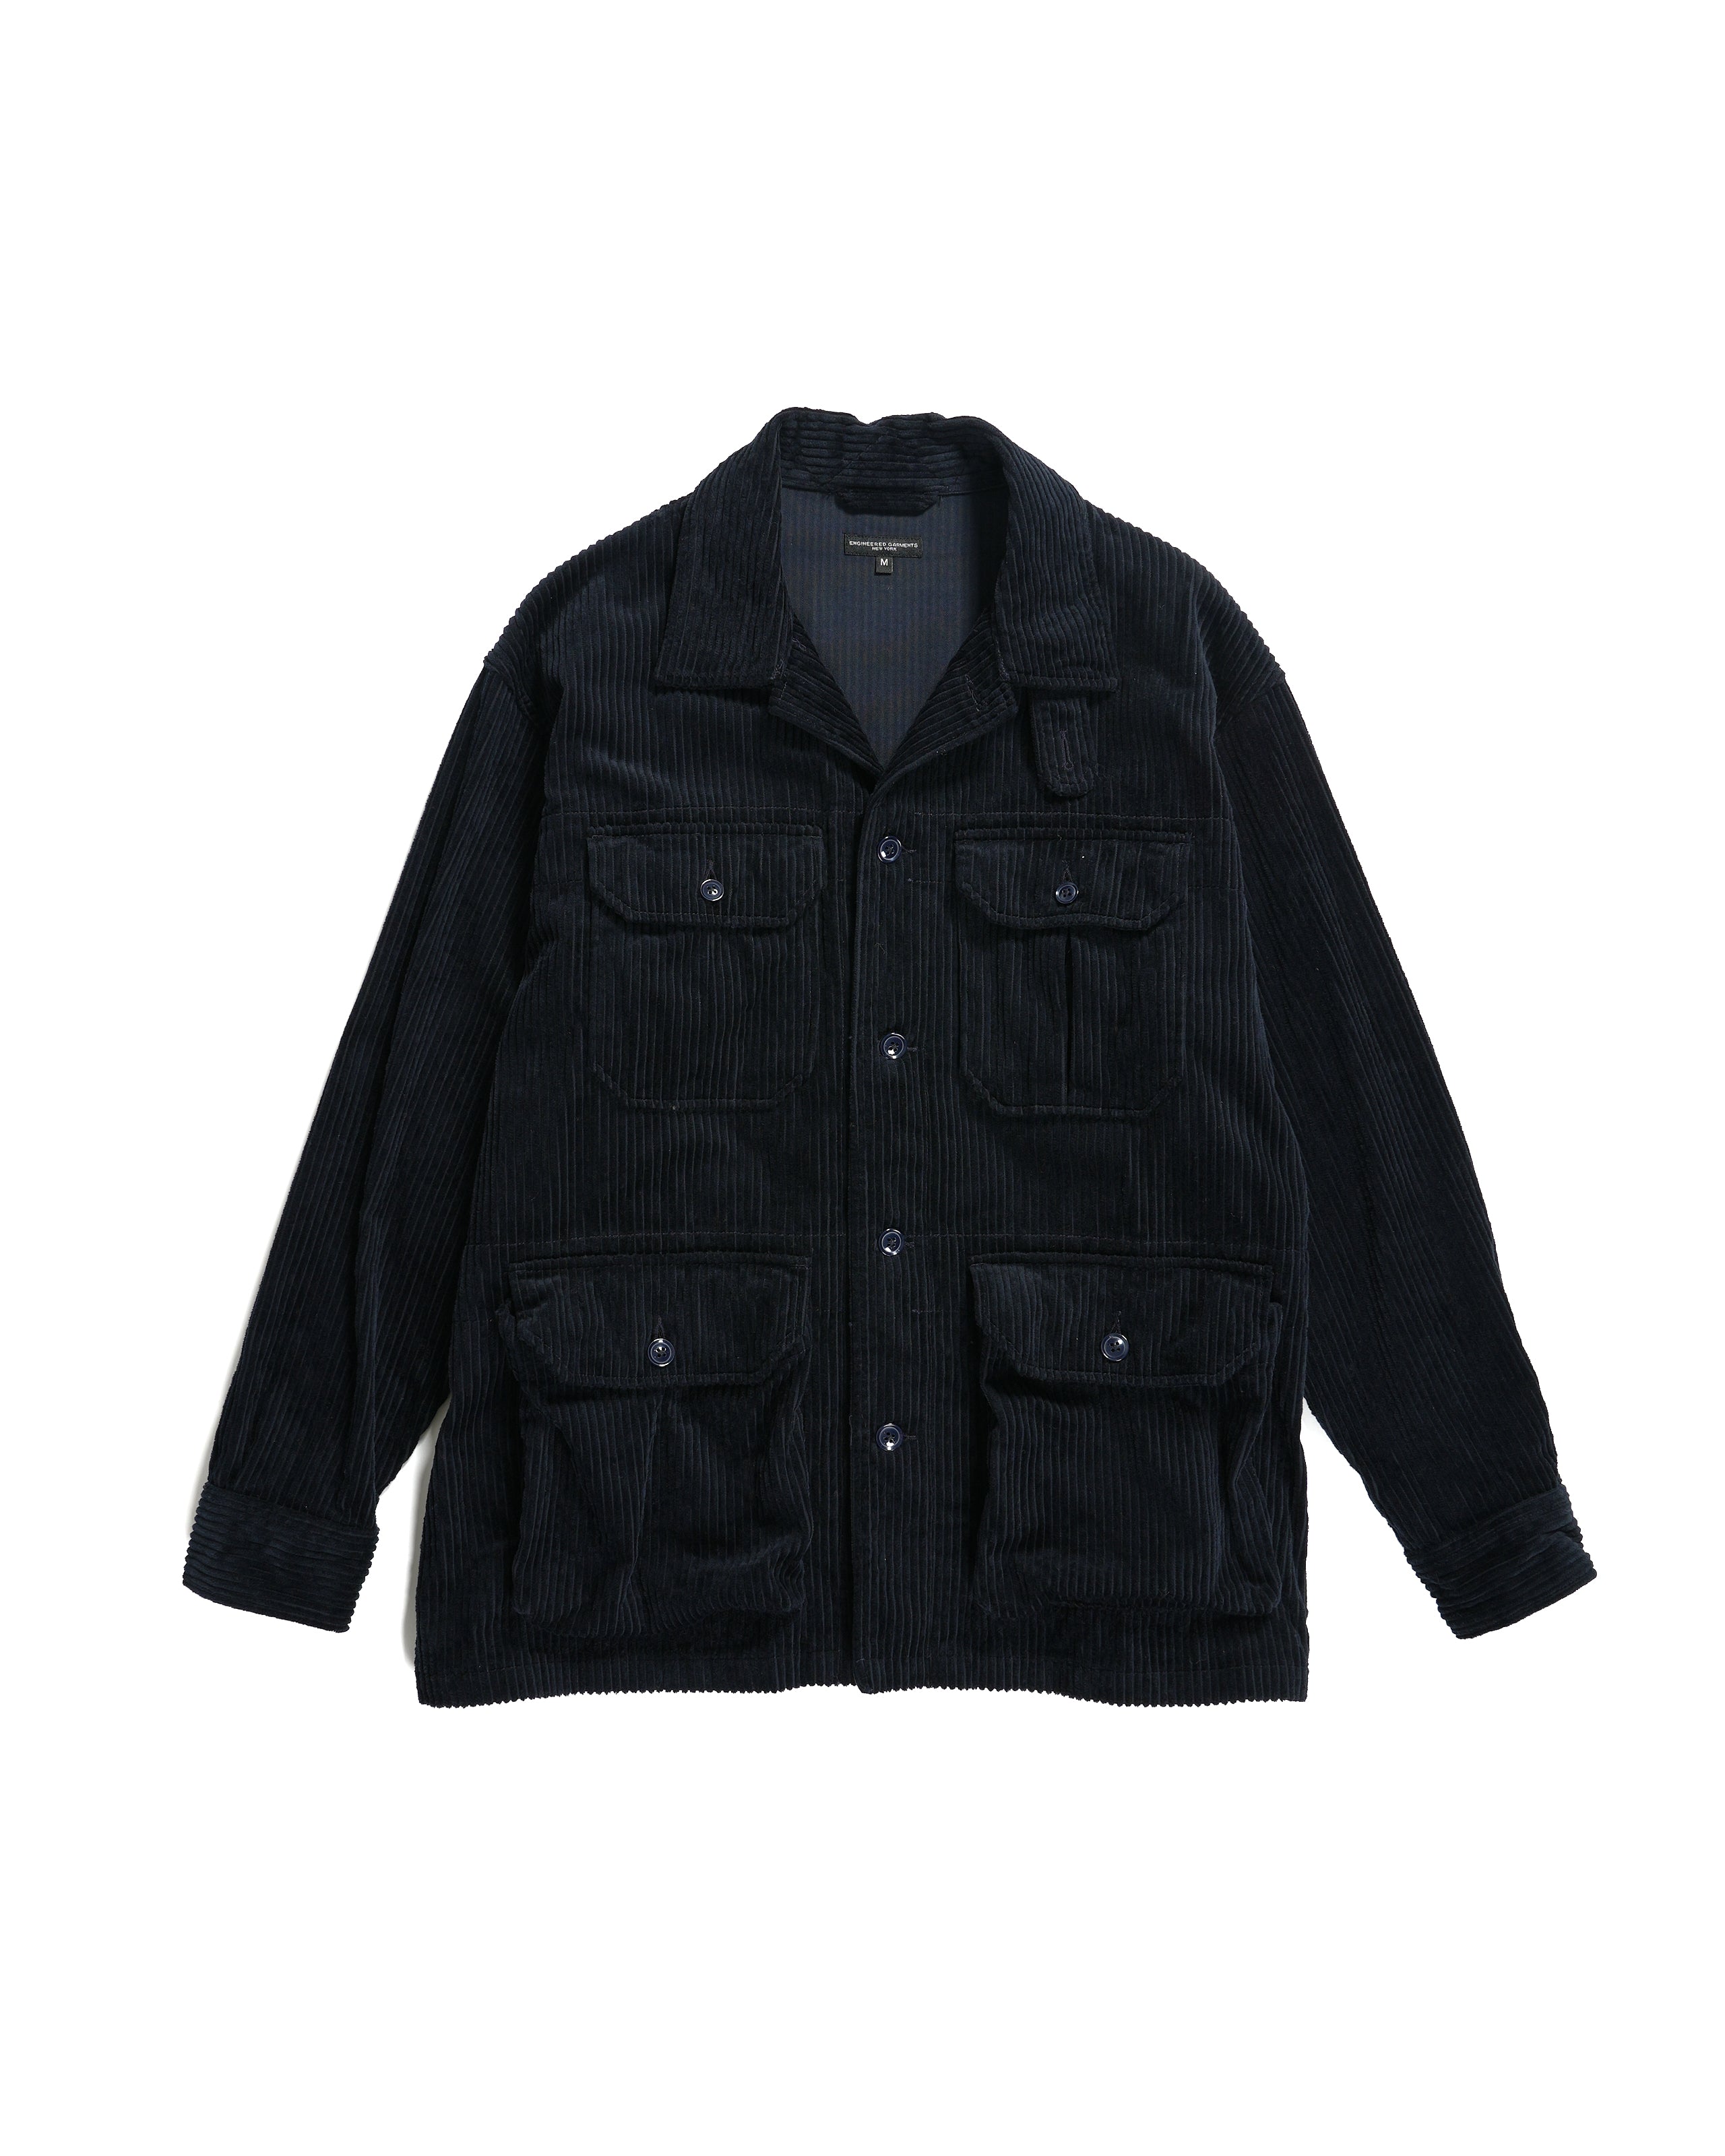 Suffolk Shirt Jacket - Dk. Navy Cotton 4.5W Corduroy